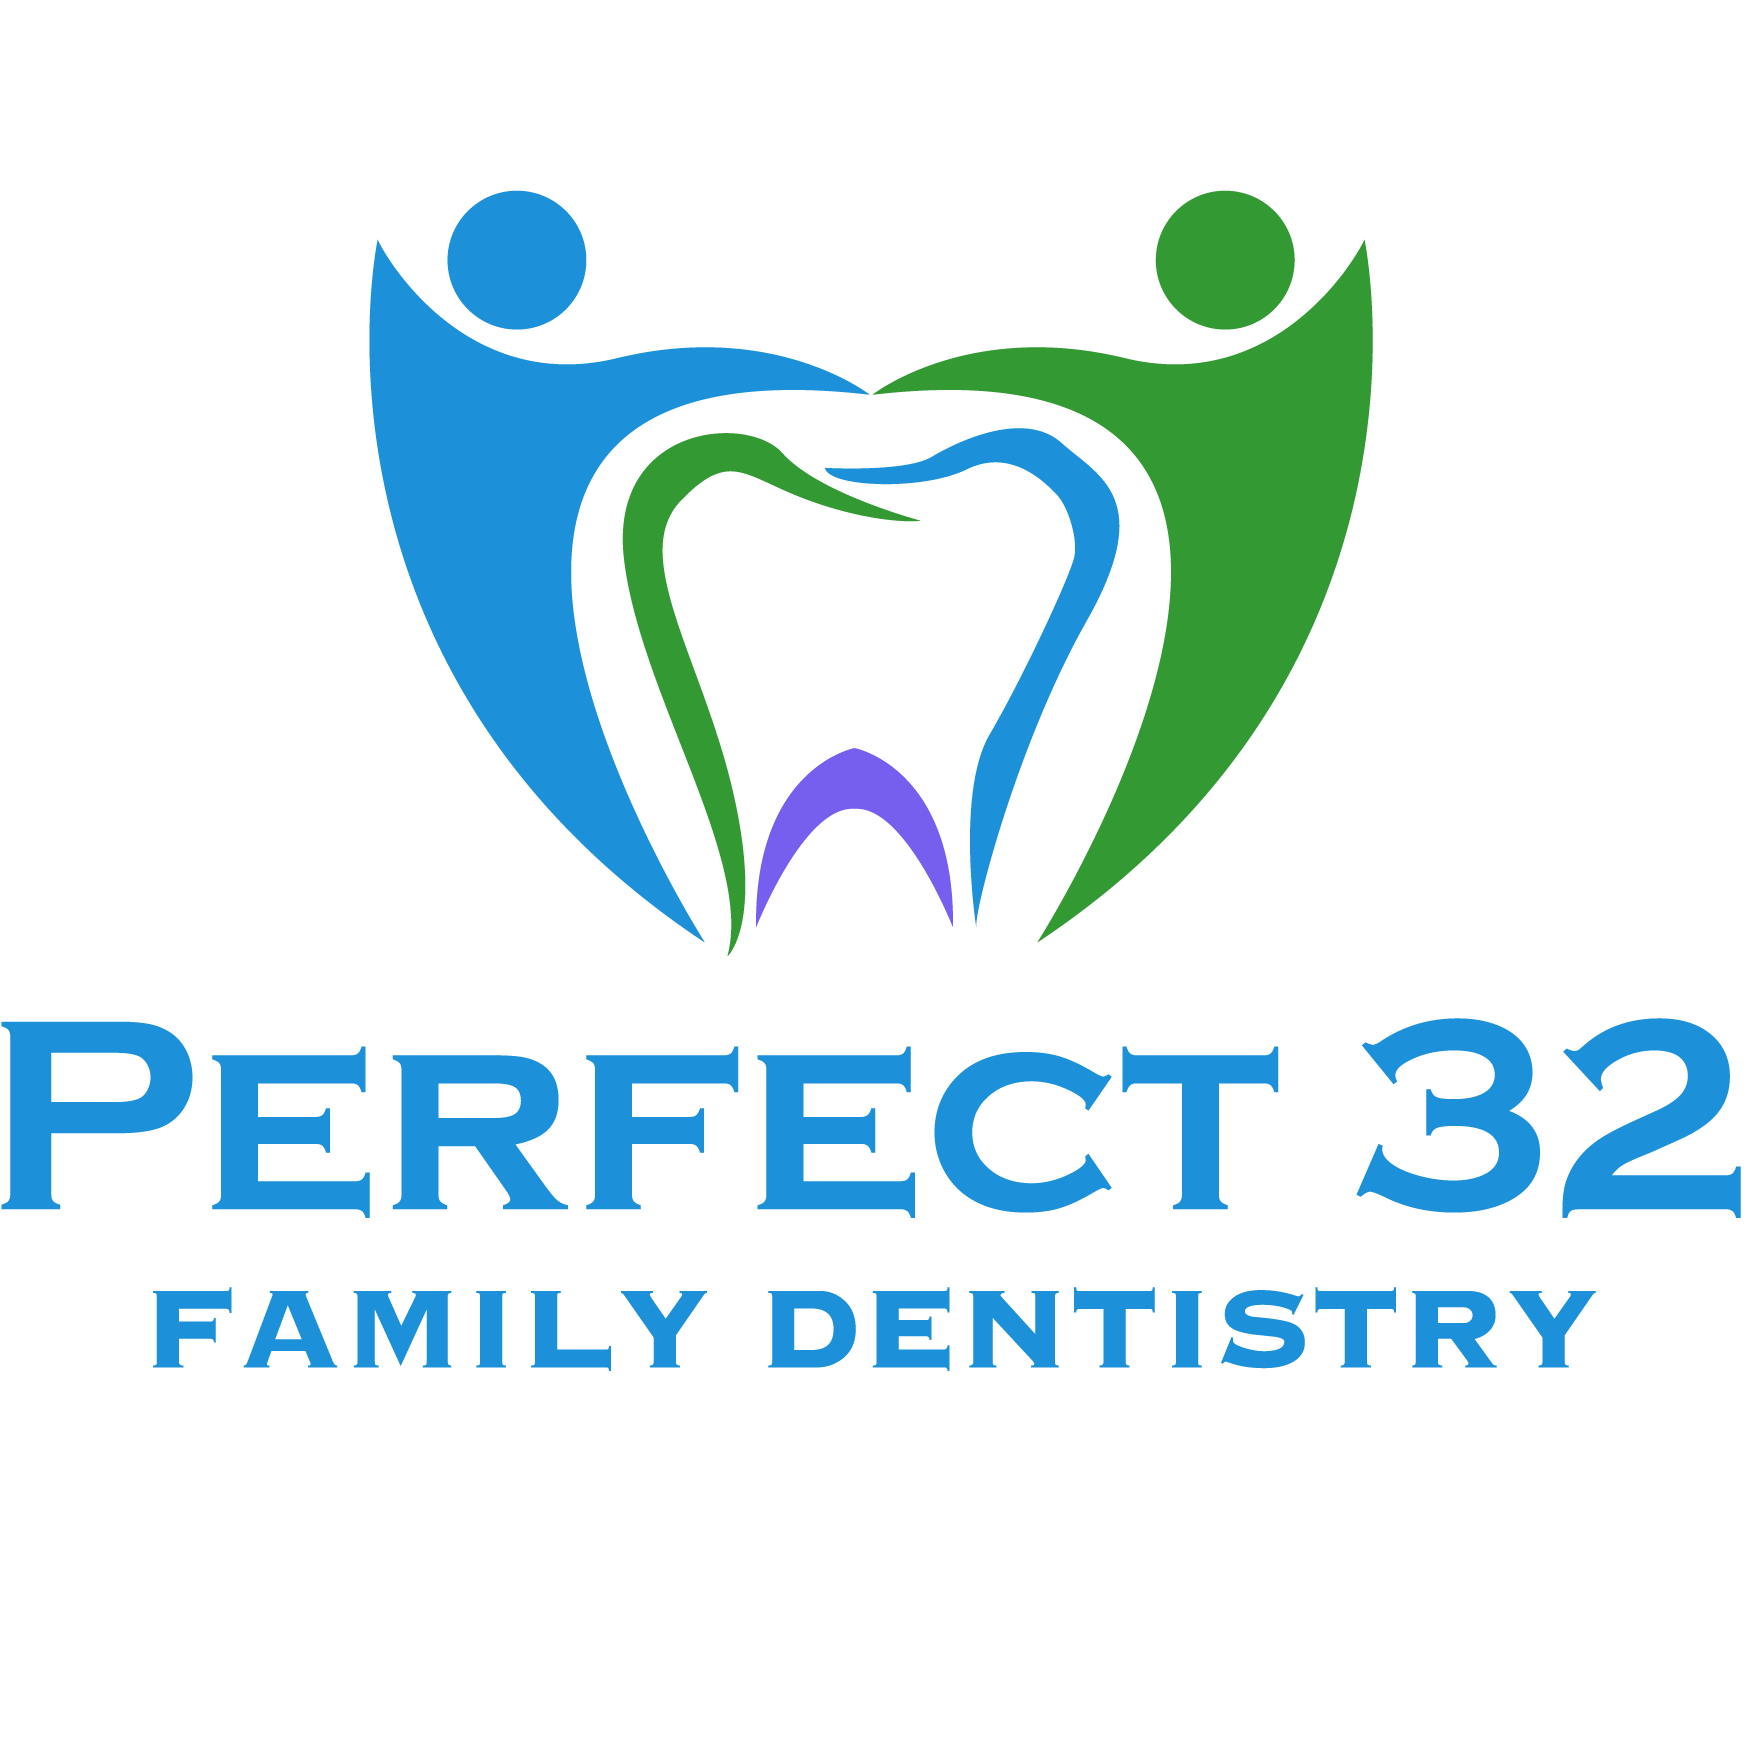 Perfect 32 Family Dentistry Photo